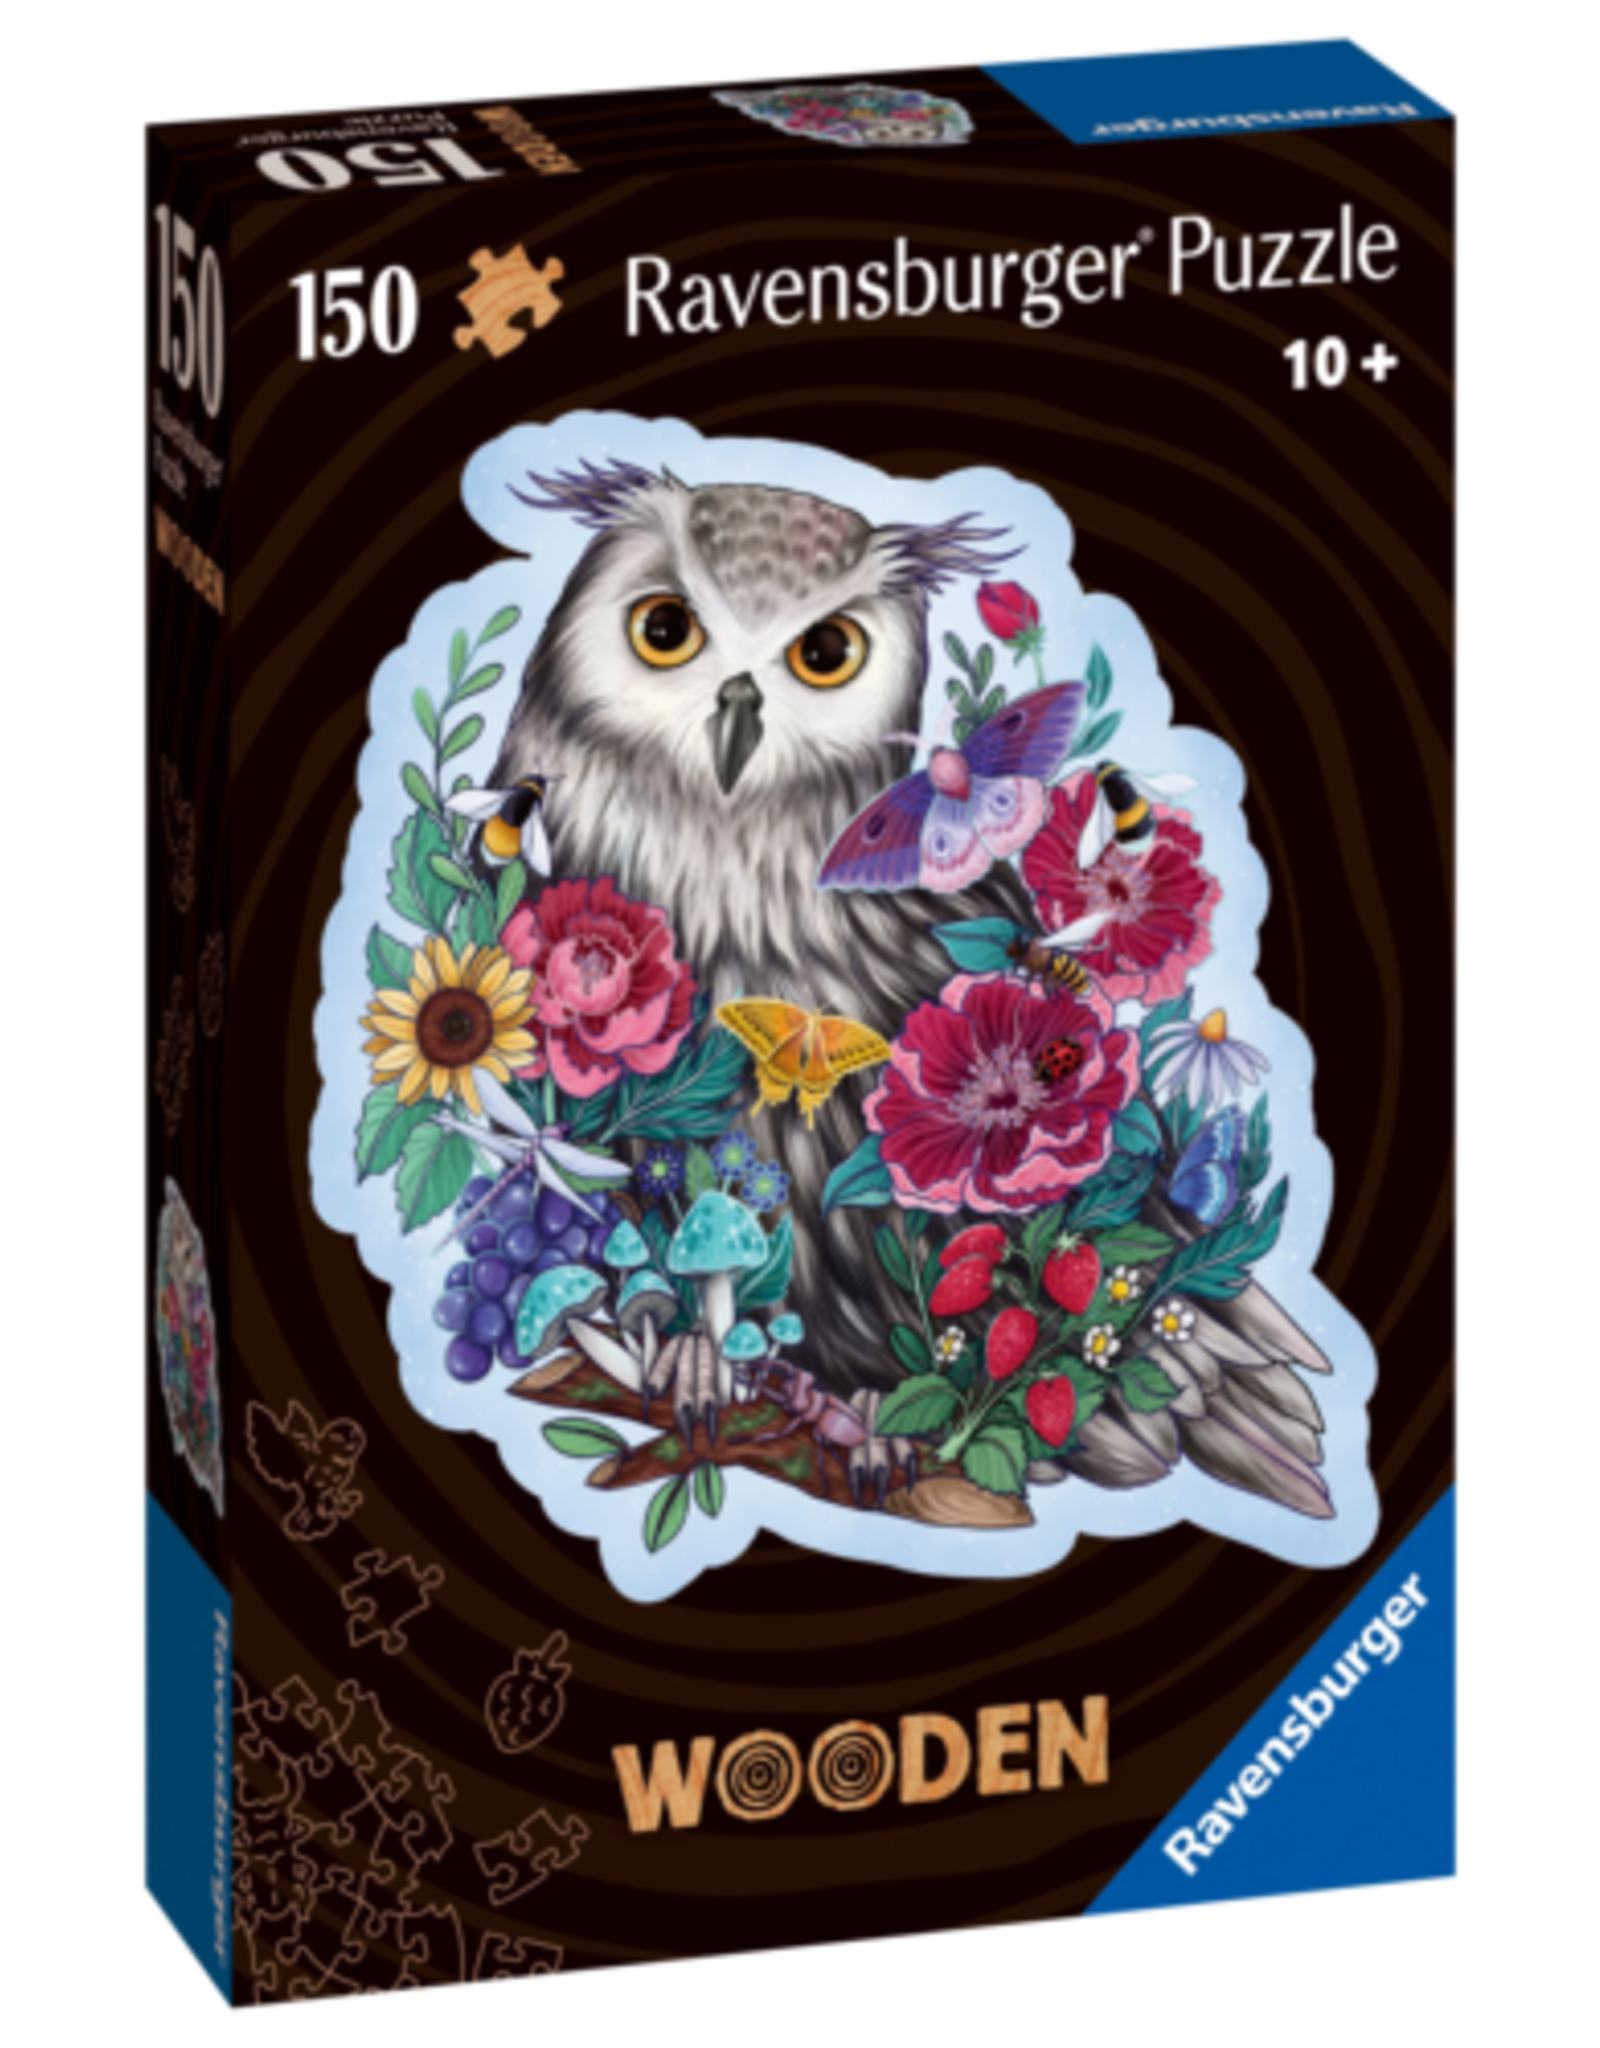 Ravensburger Wooden Owl 150pc